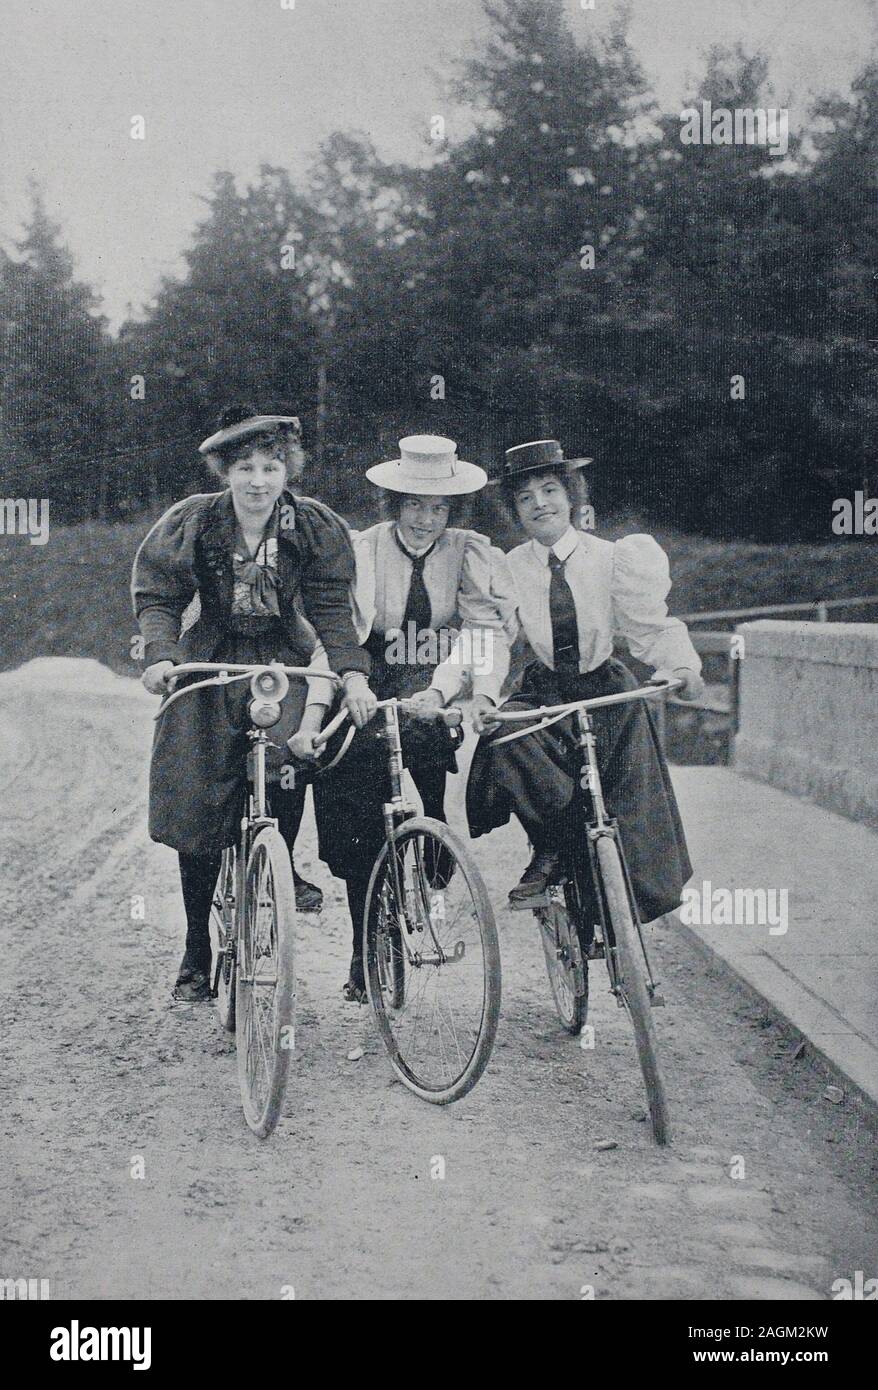 Tres mujeres en la bicicleta, impresión original desde el año 1899, Drei Frauen auf dem Rad, einer Reproduktion Originalvorlage aus dem 19. Jahrhundert, digital verbessert Foto de stock